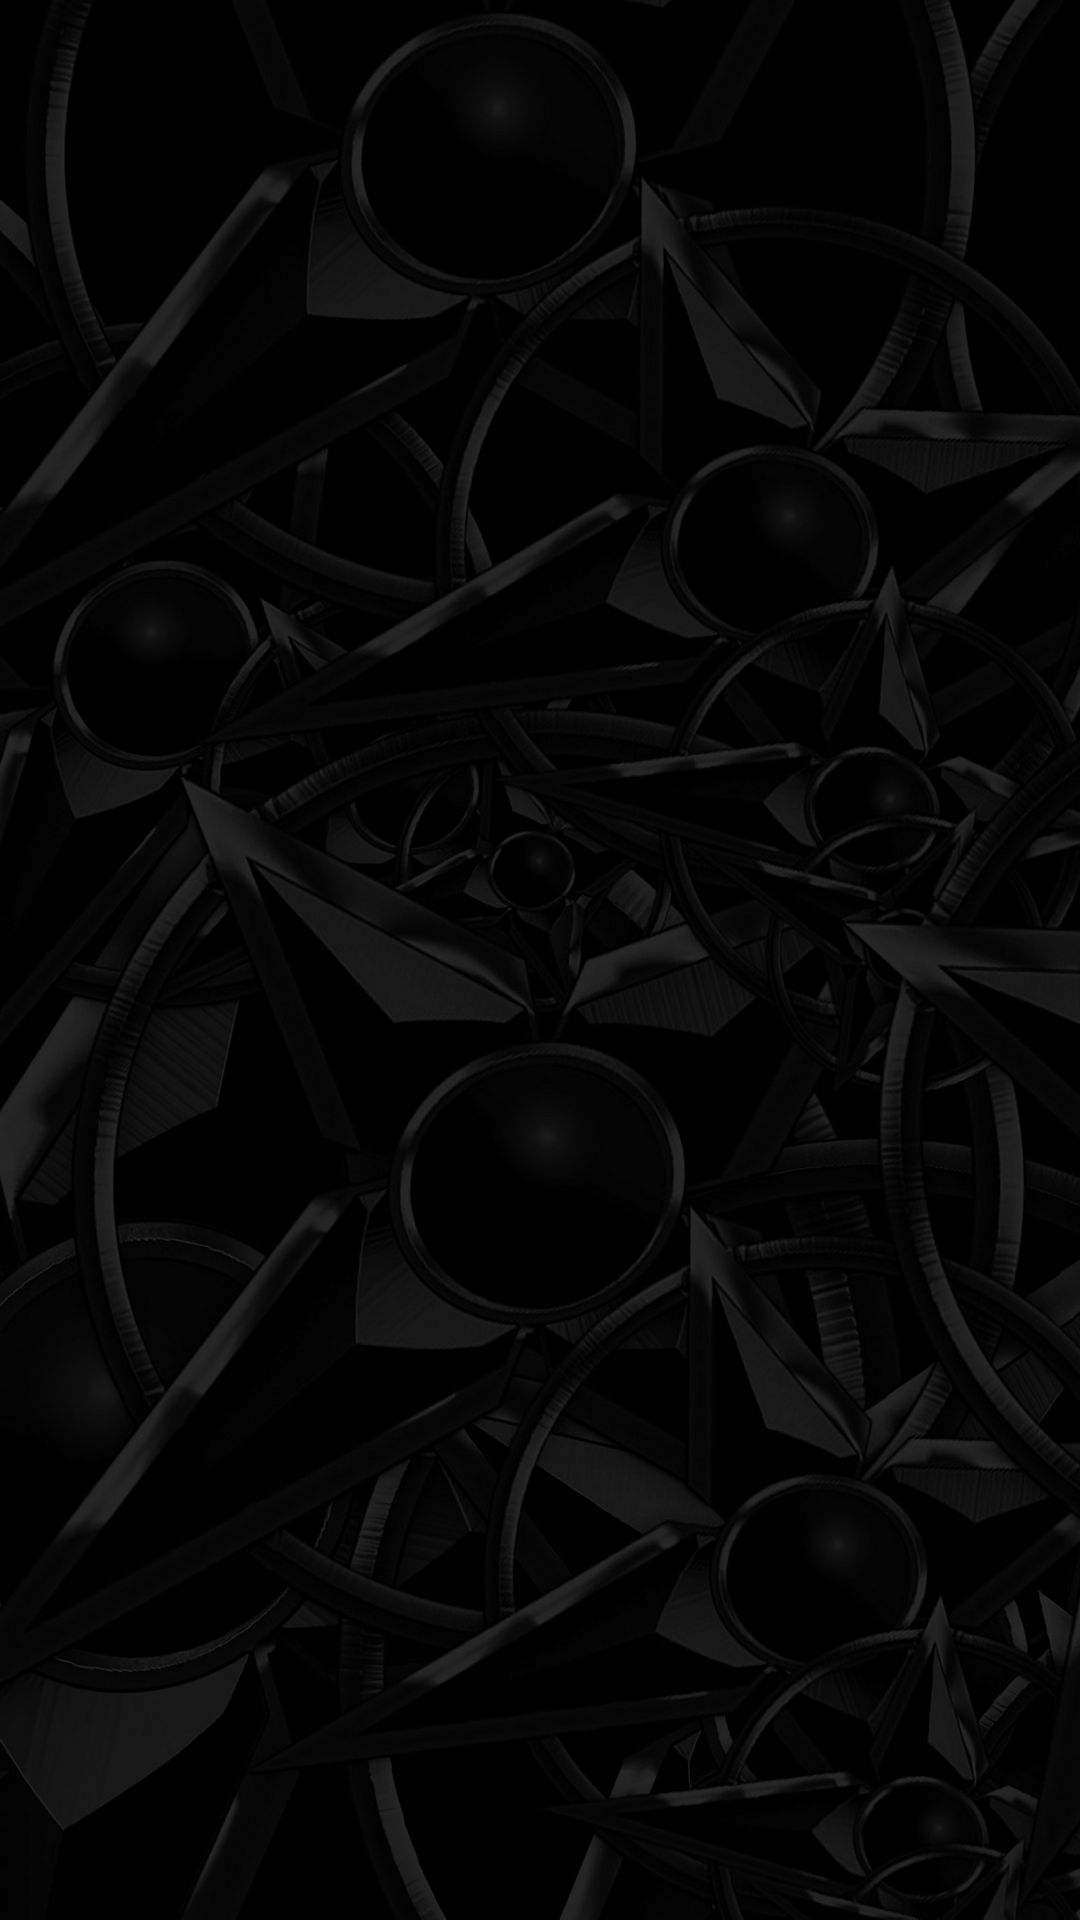 Download wallpaper 1080x1920 texture, black, dark, structure samsung galaxy  s4, s5, note, sony xperia z, z1, z2, z3, htc one, lenovo vibe hd background